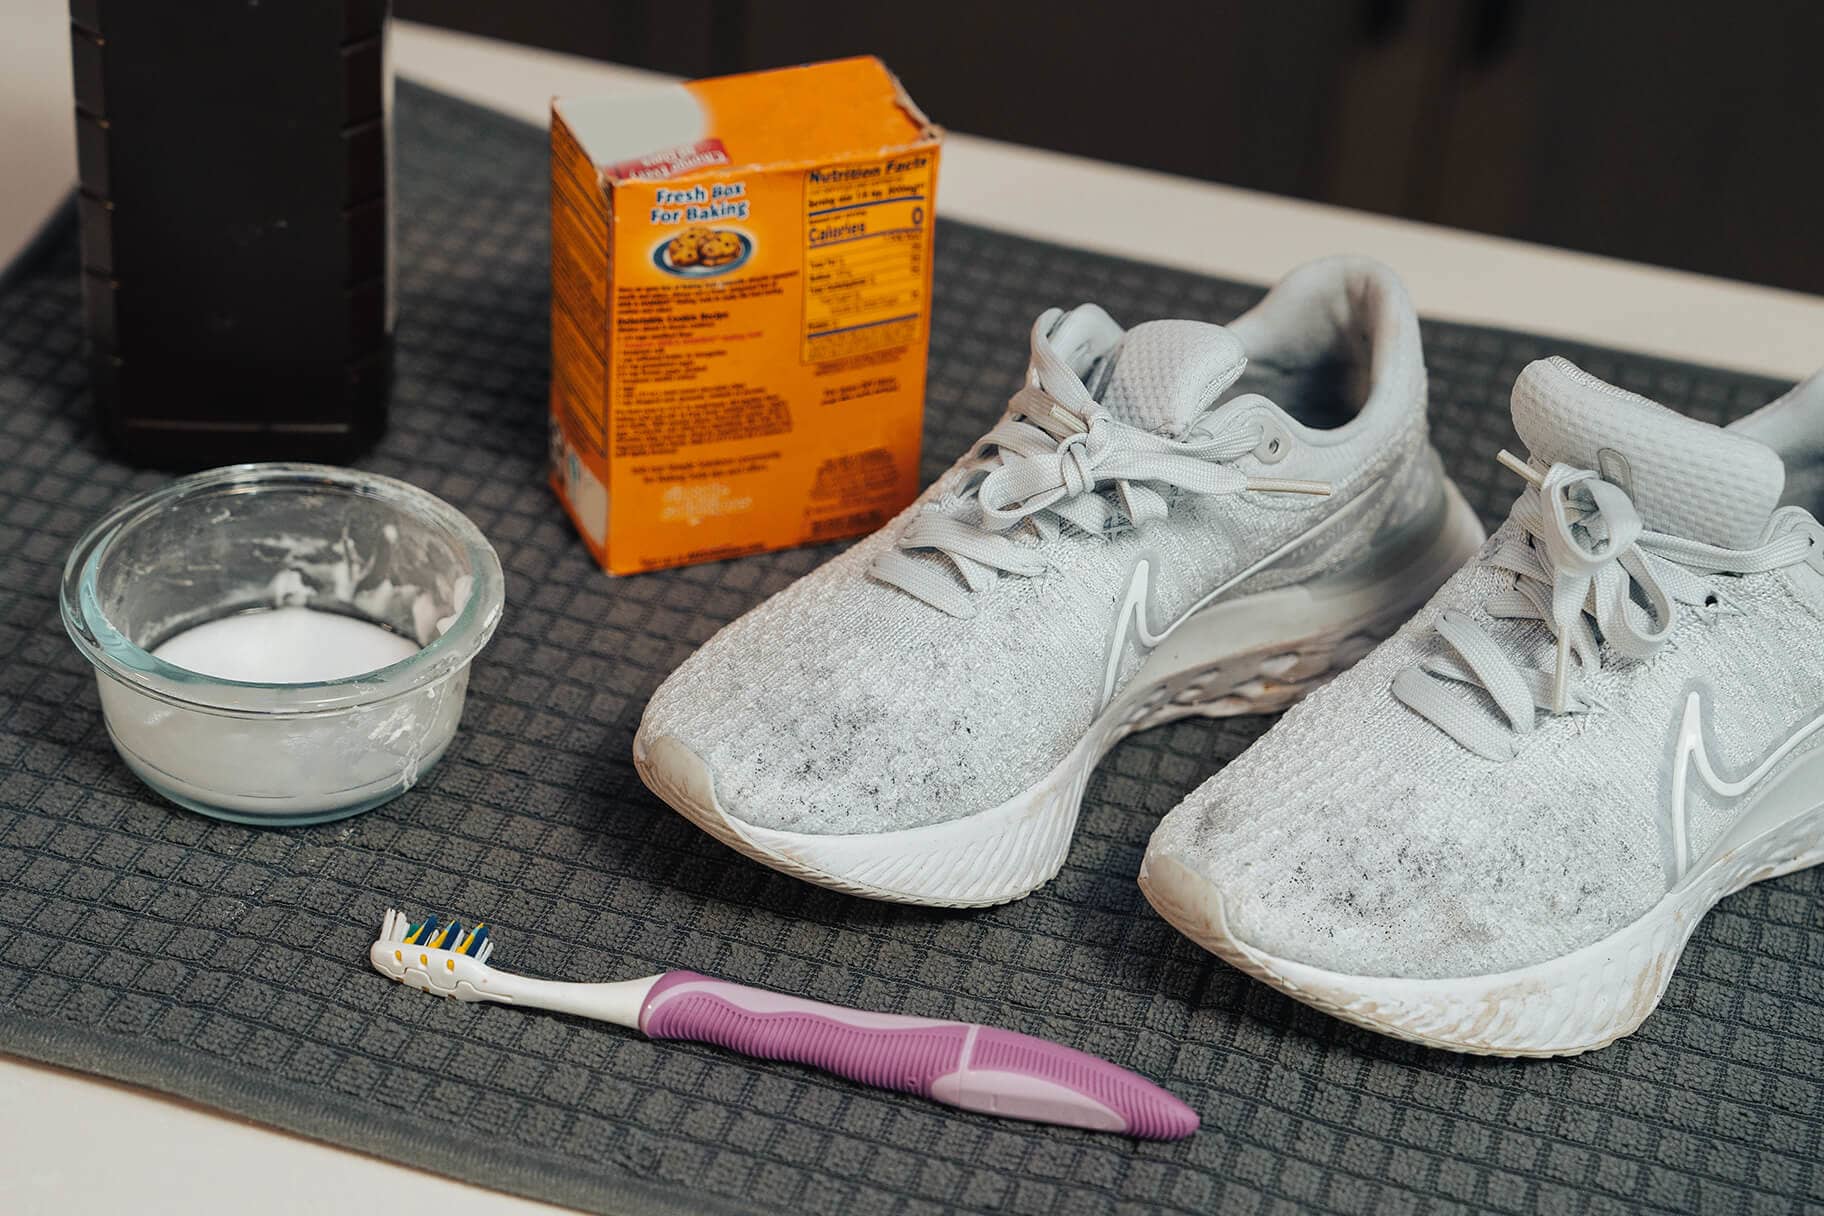 Cómo limpiar tu calzado 6 pasos fáciles. Nike